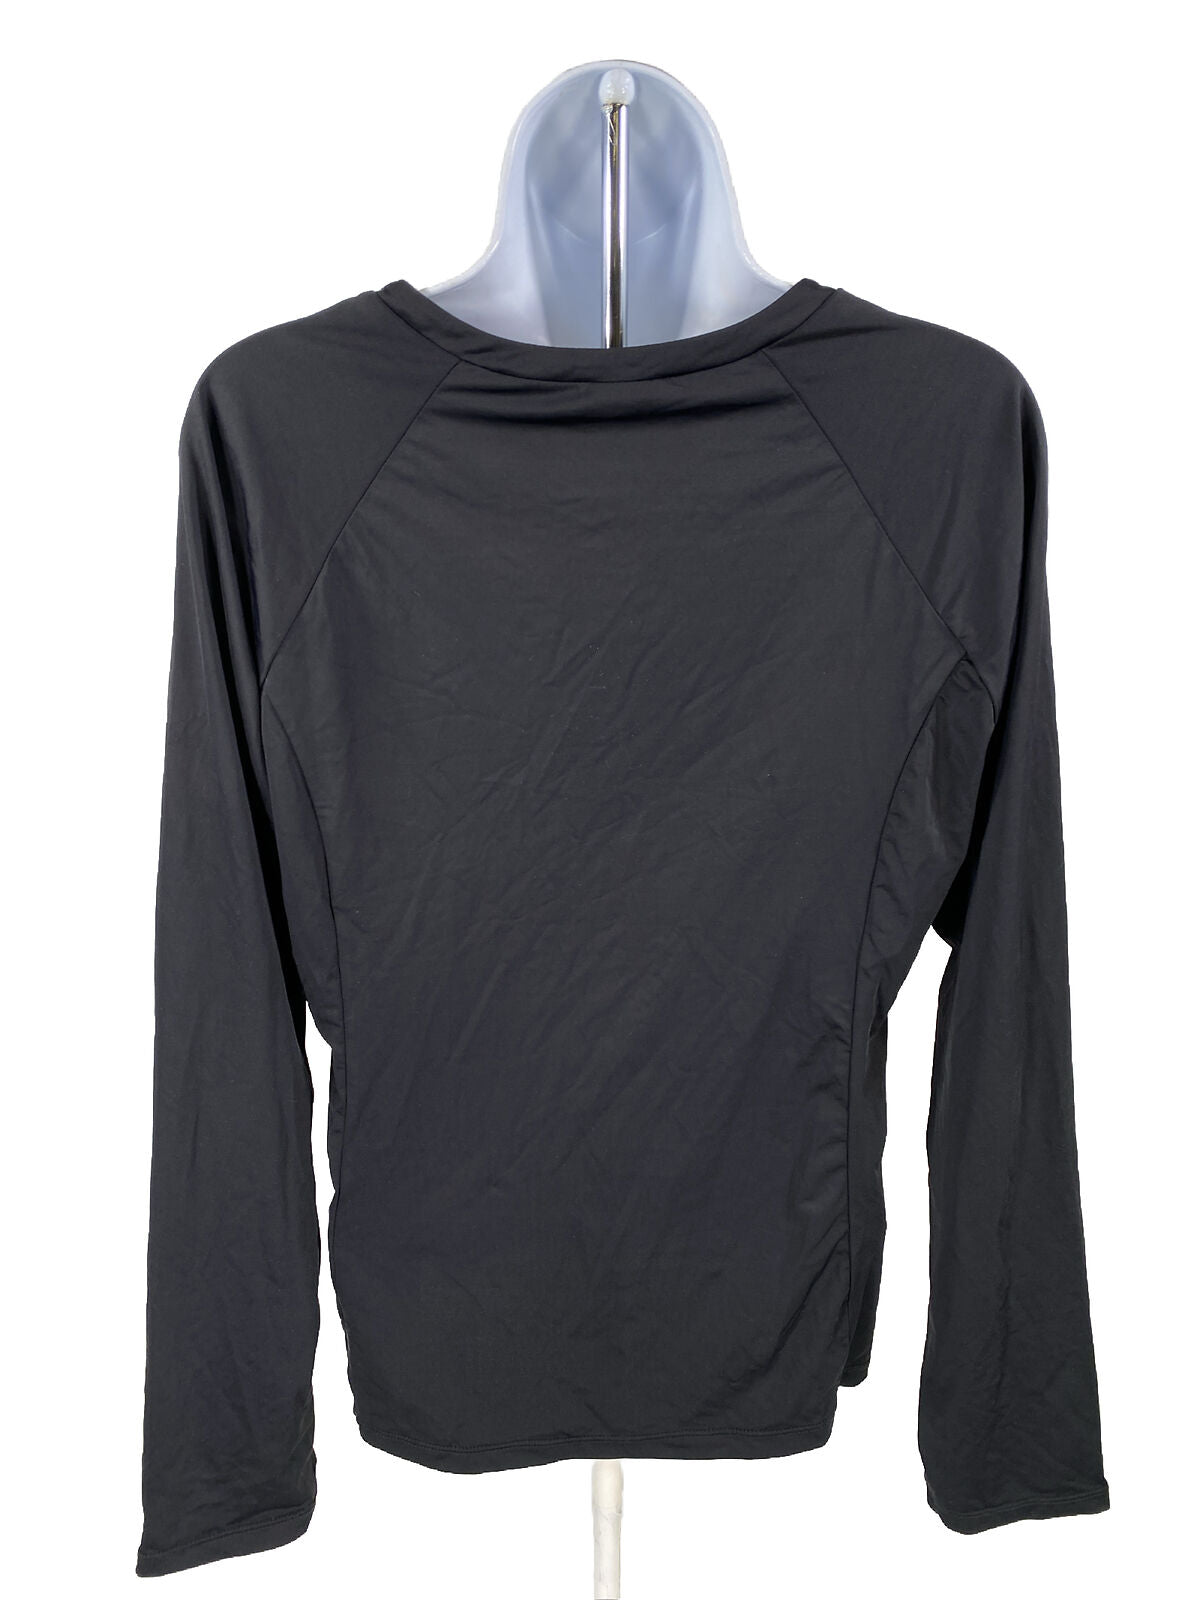 NEW APT.9 Women's Black/White Long Sleeve Athletic Shirt - XL